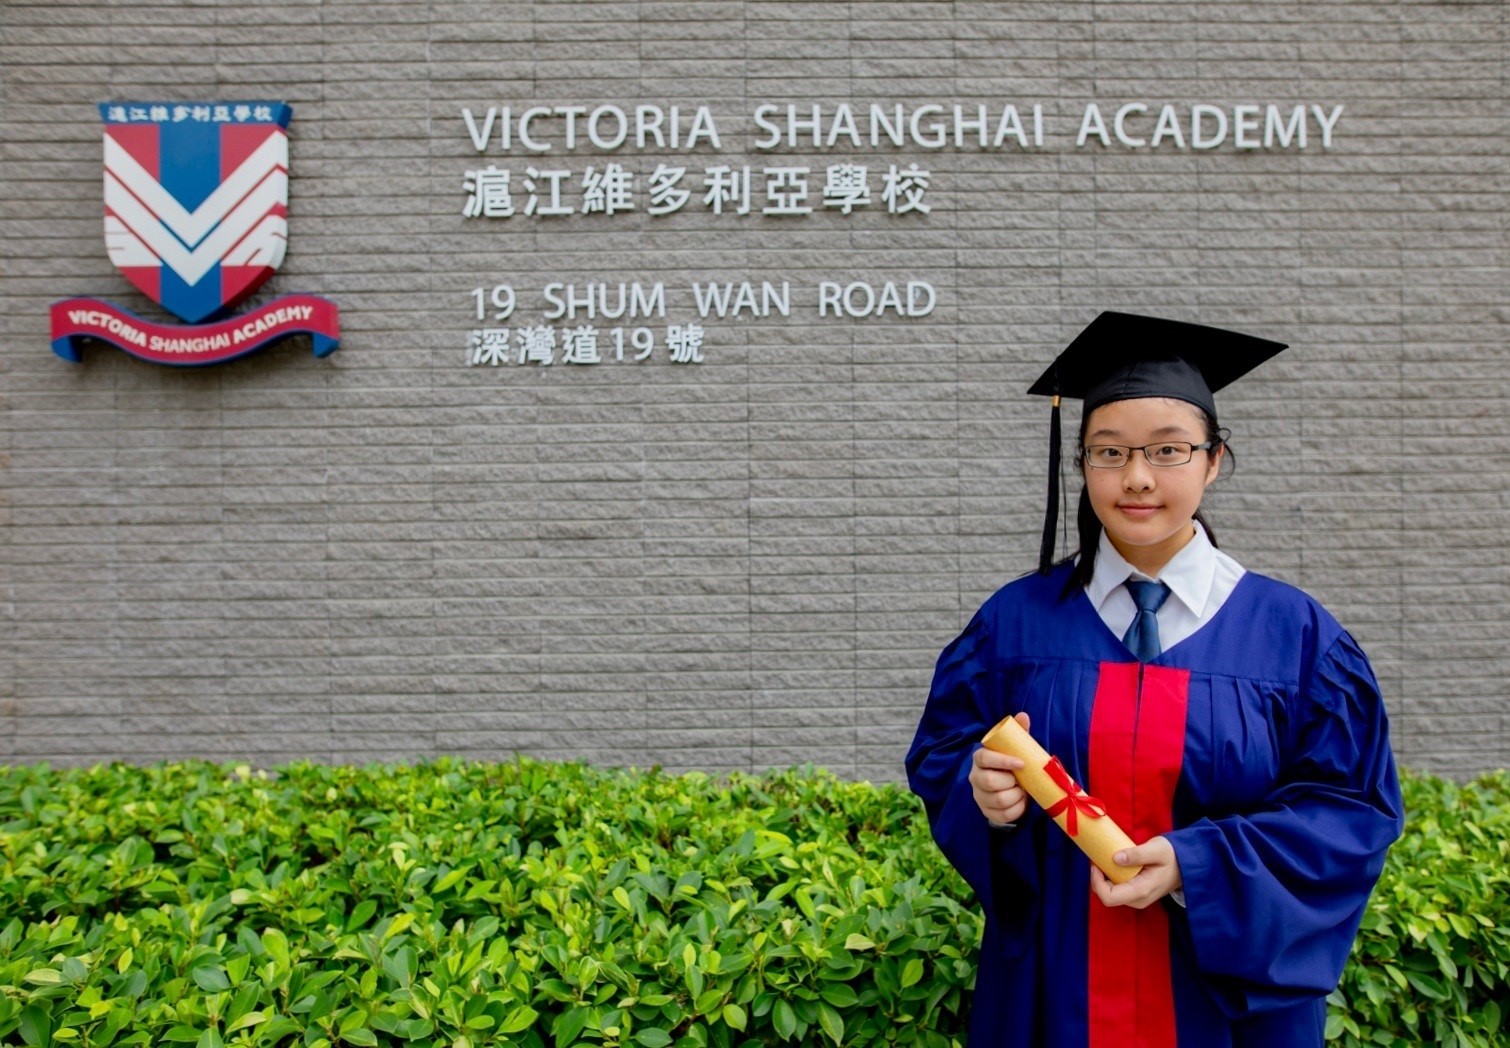 Cherrie Liu achieved the IB diploma top score of 45 at Hong Kong’s Victoria Shanghai Academy last year.